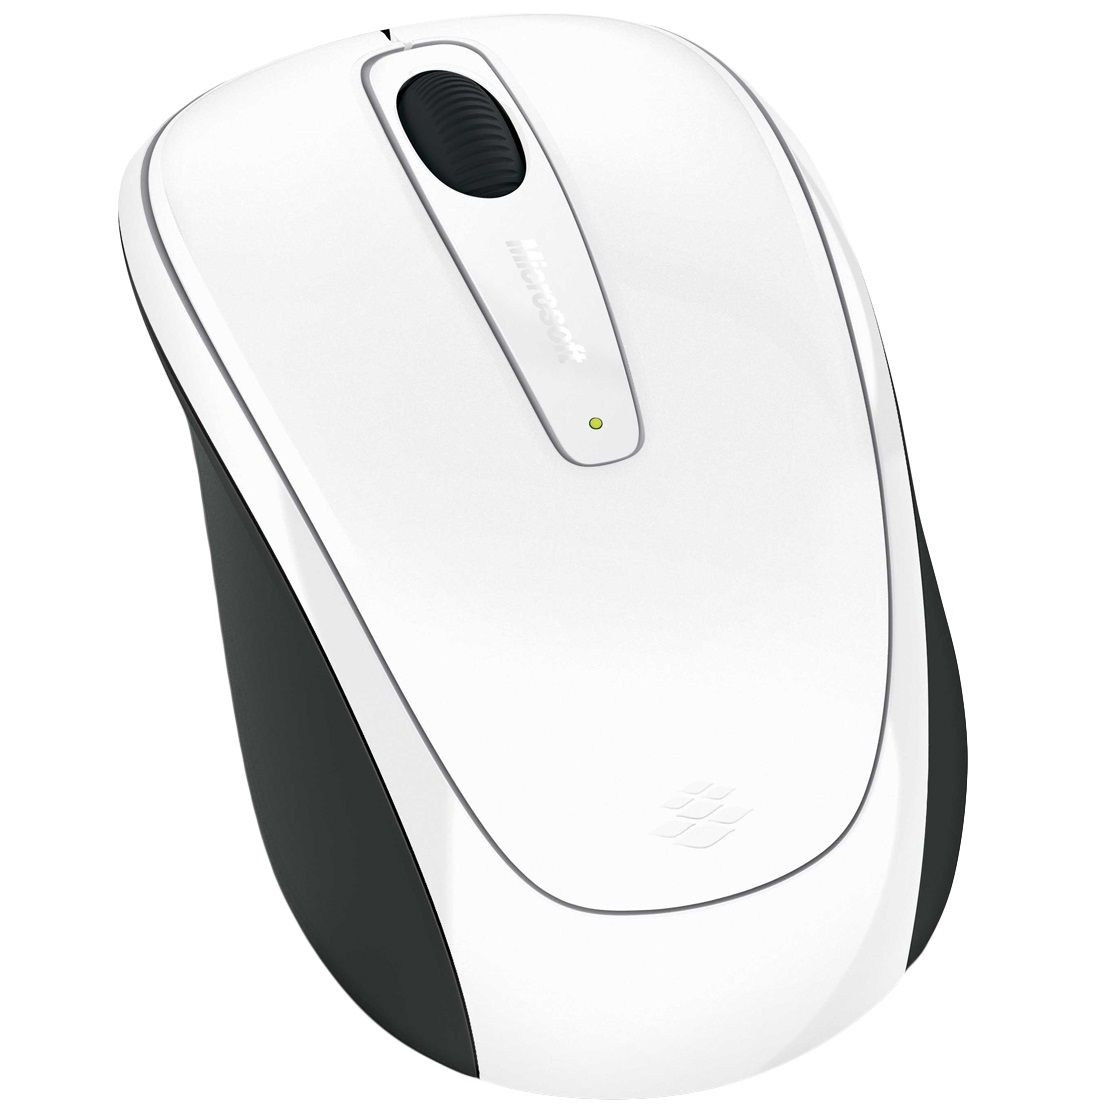  Mouse wireless Microsoft 3500, Alb 